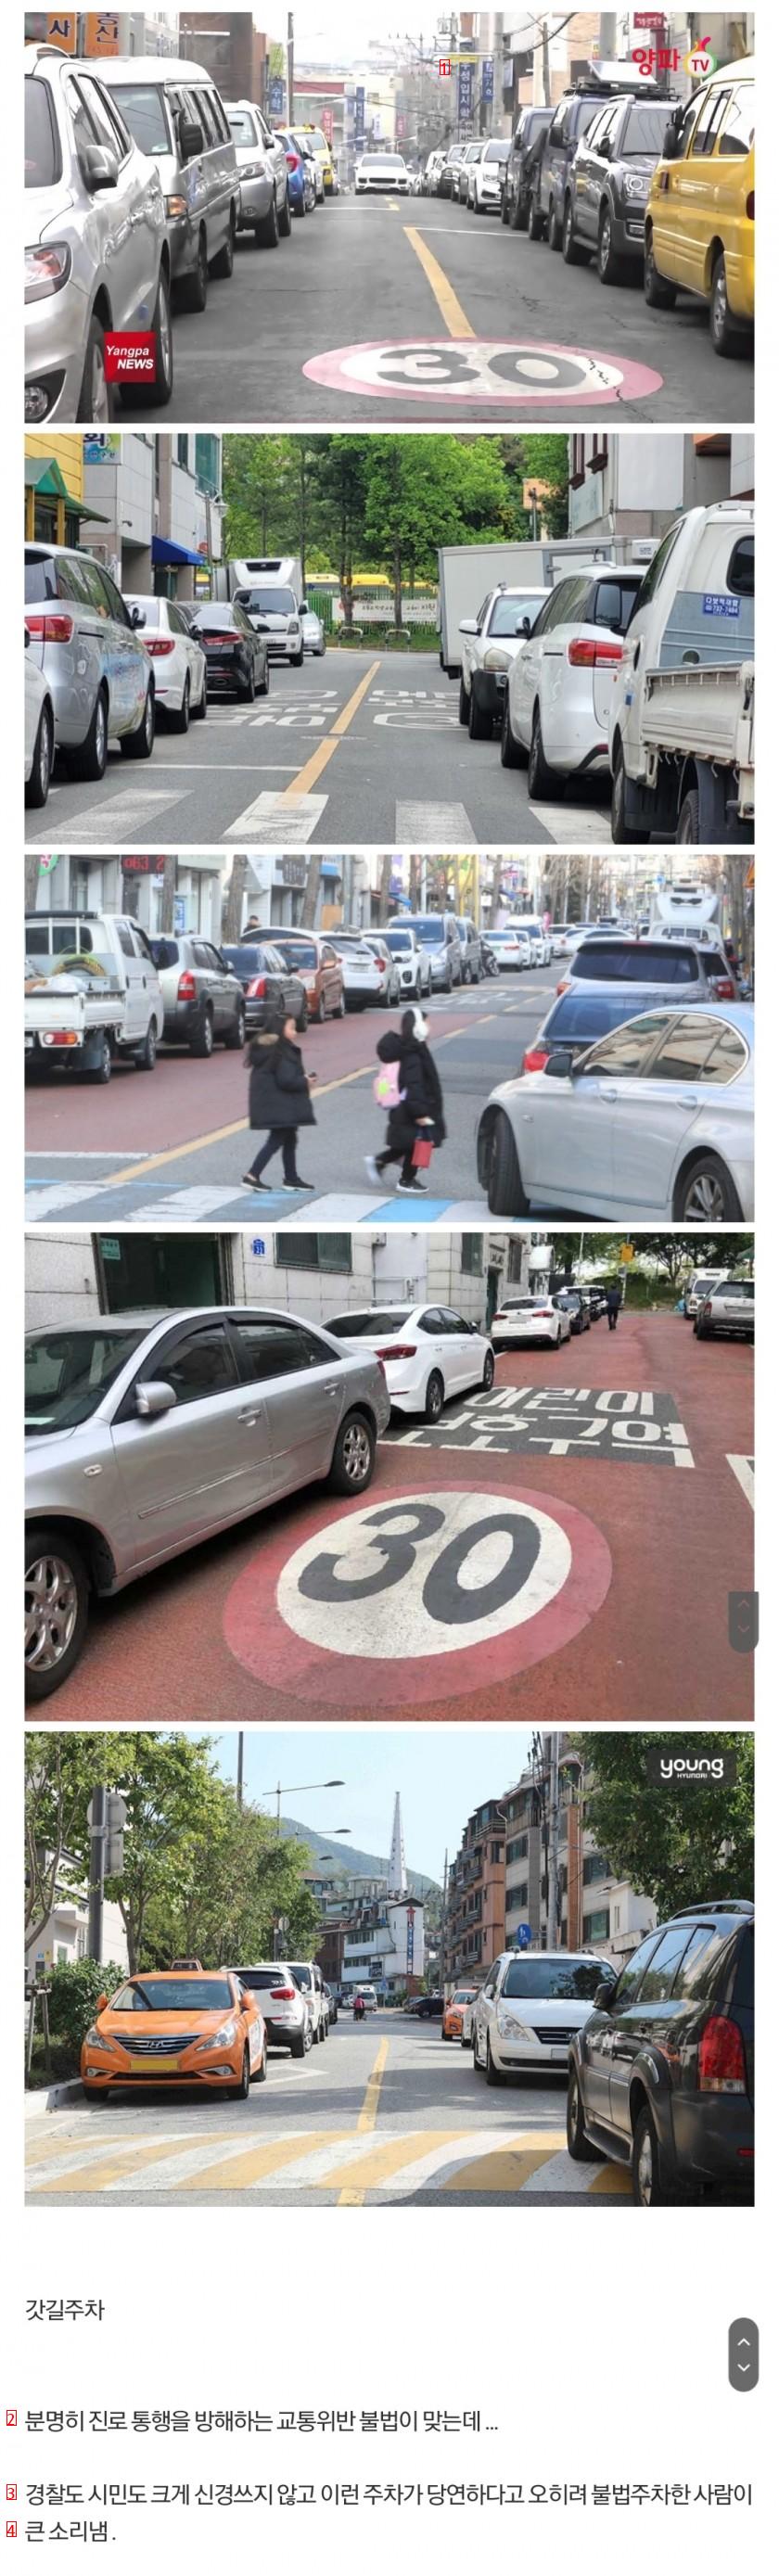 Korea's Curious Parking Culture